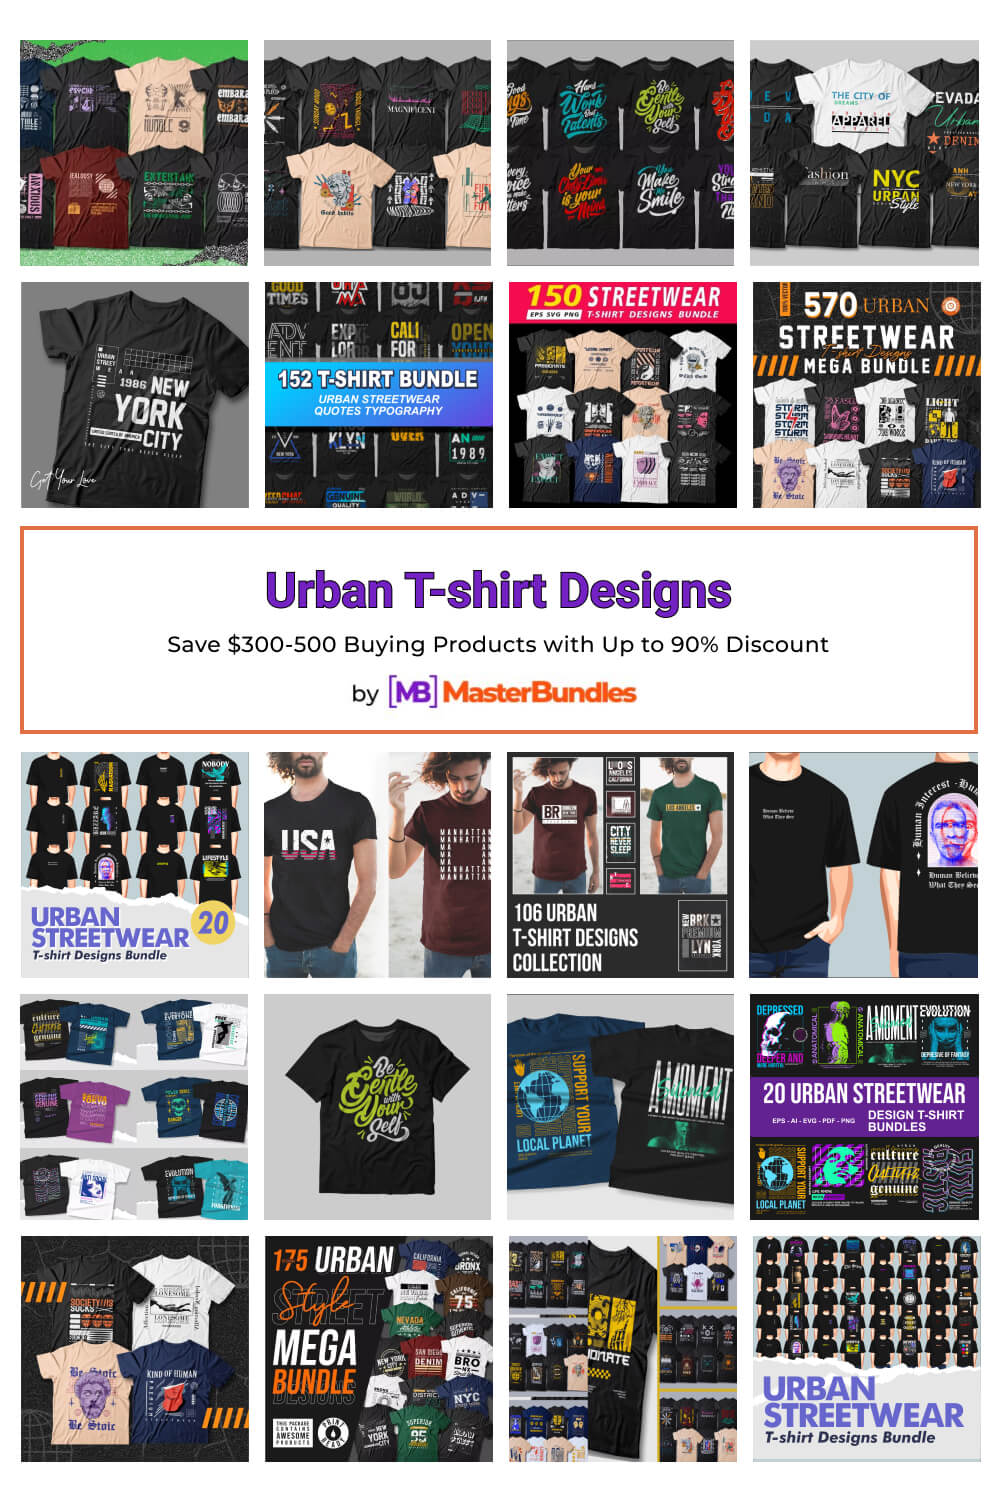 urban t shirt designs pinterest image.